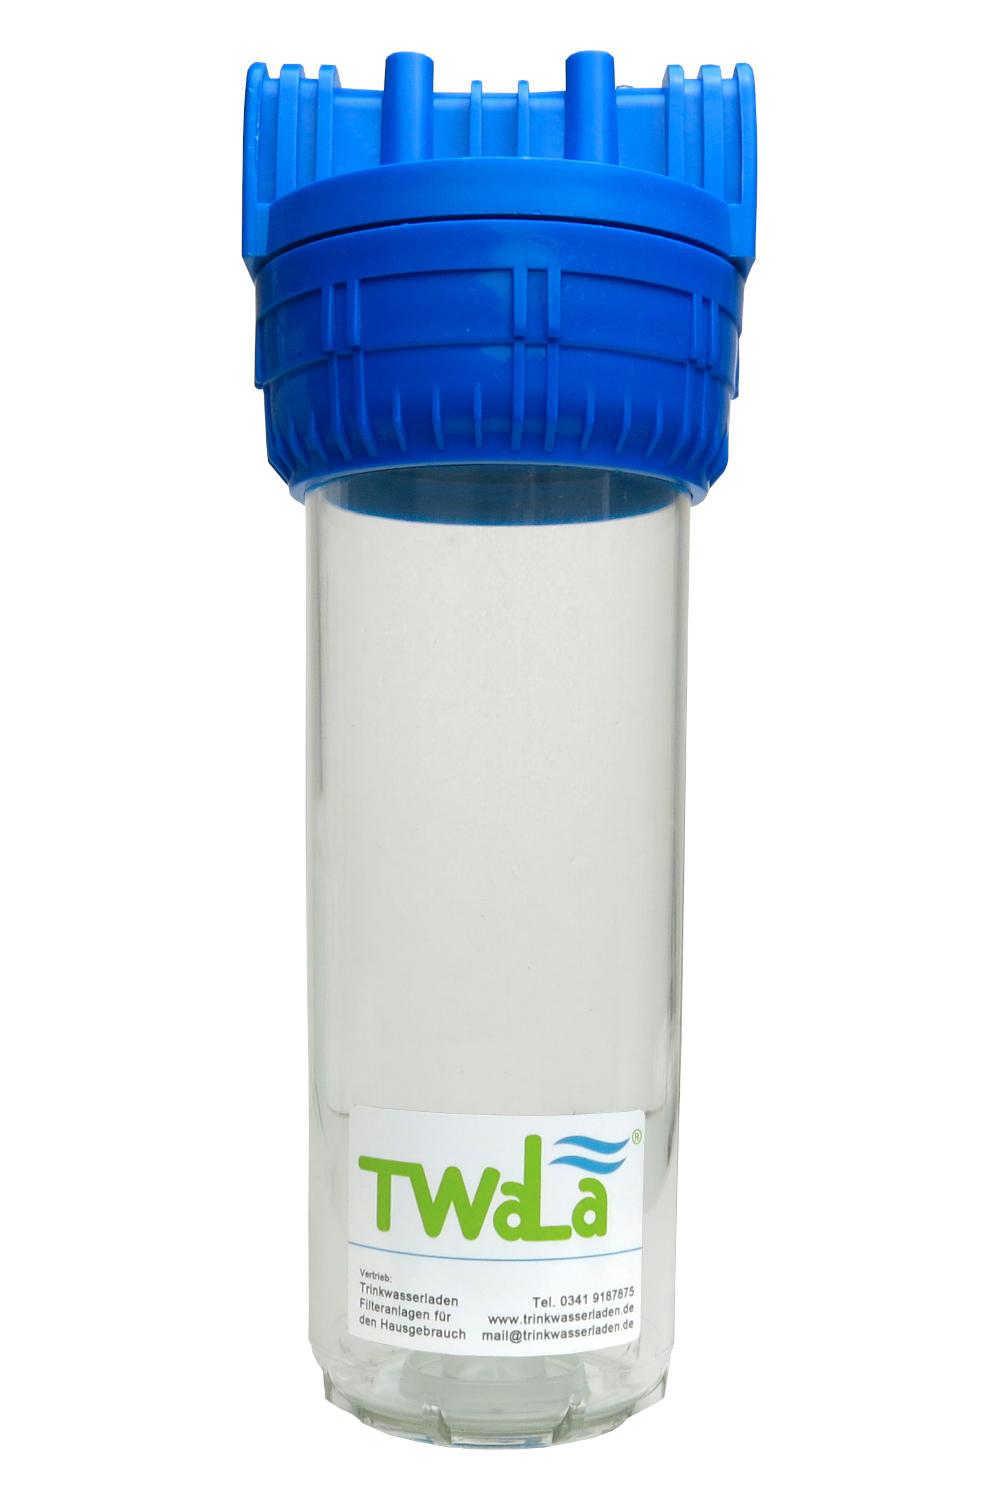 TWaLa Wasserfilter Gehäuse 1/2" Messing Anschluss transparent blau für 10" Filterpatronen